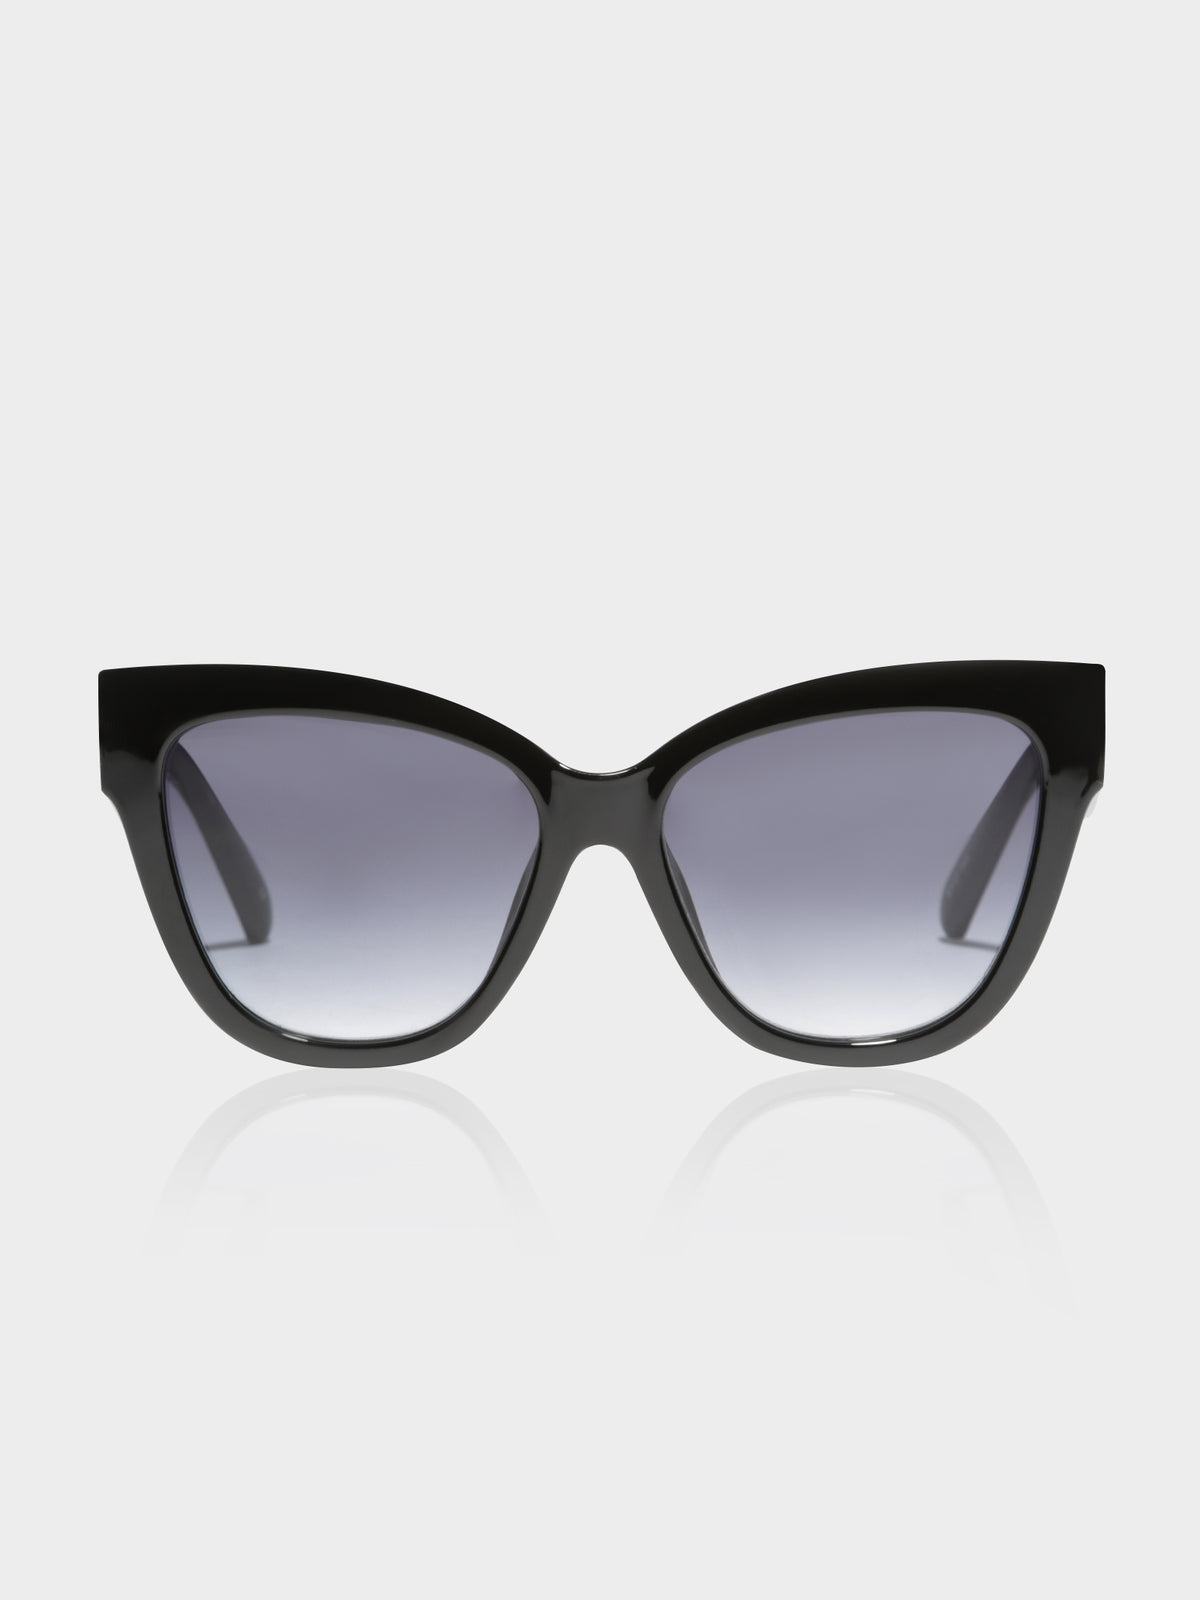 Le Vacanze Cat Eye Sunglasses in Black